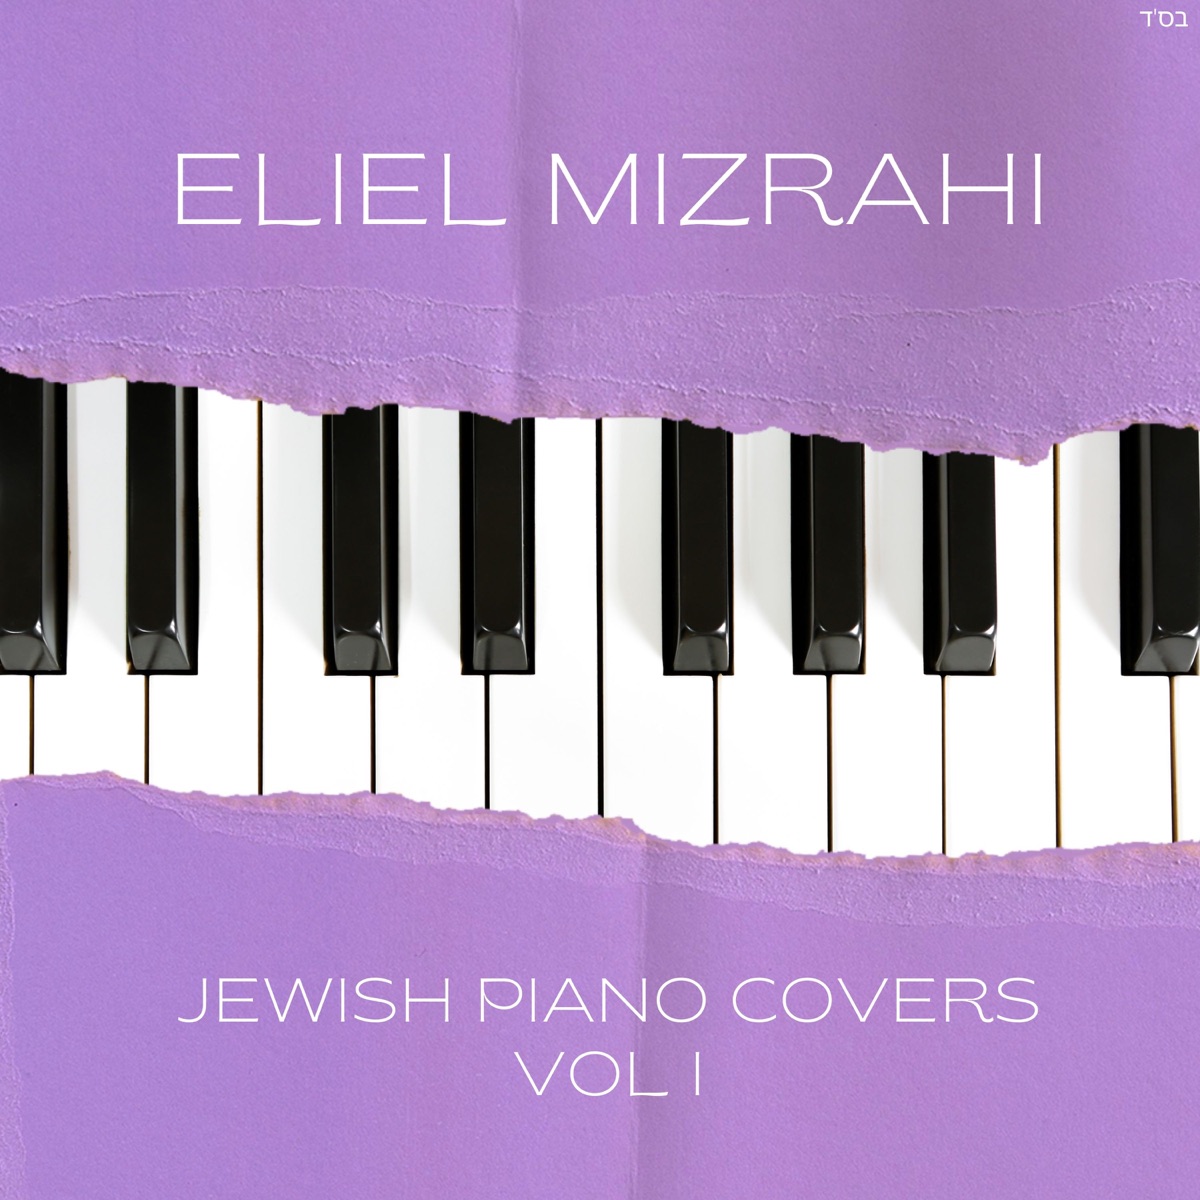 Jewish Piano Covers, Vol. 1 by Eliel Mizrahi on Apple Music